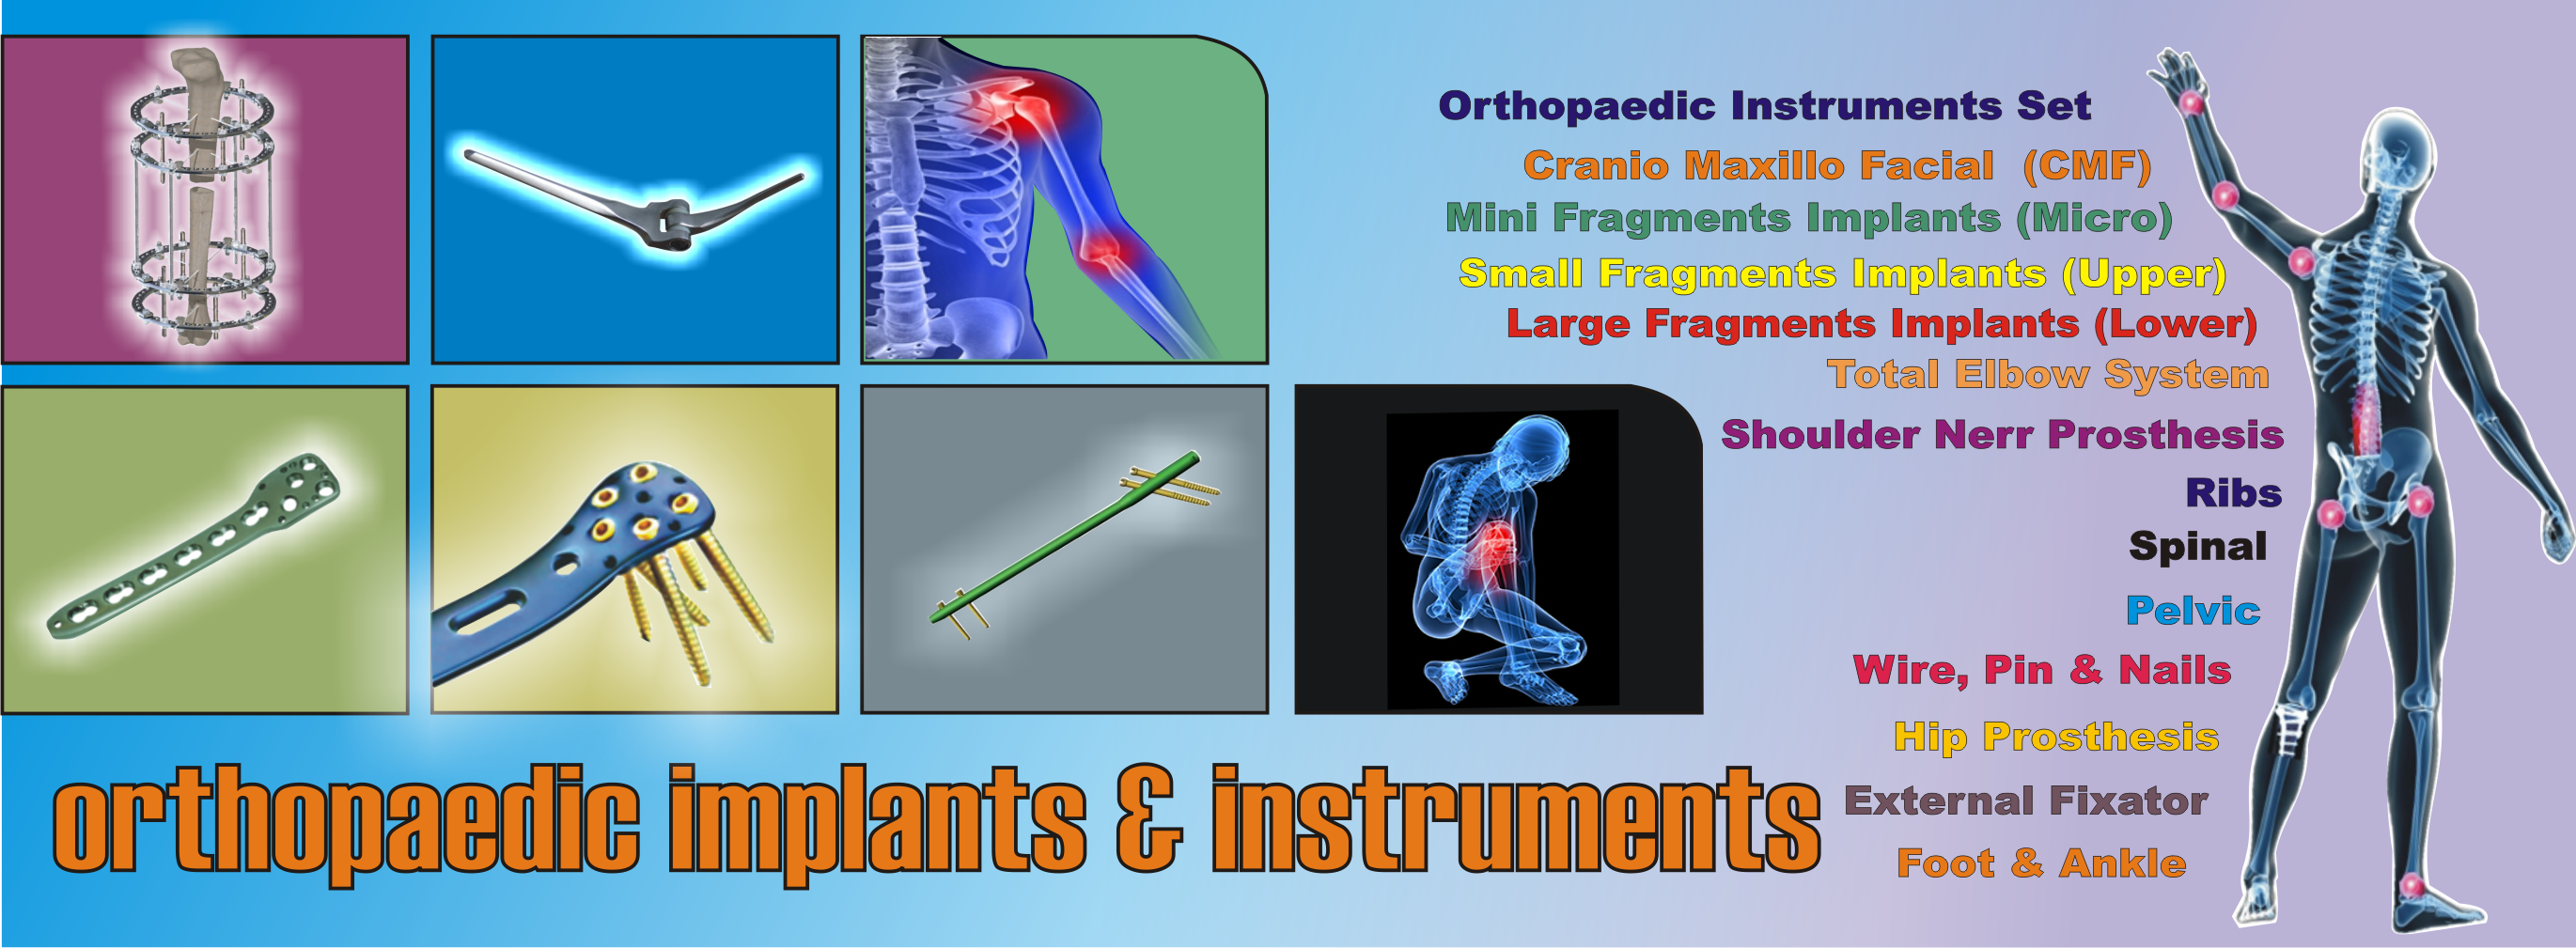 Orthopaedic Implants & Instruments